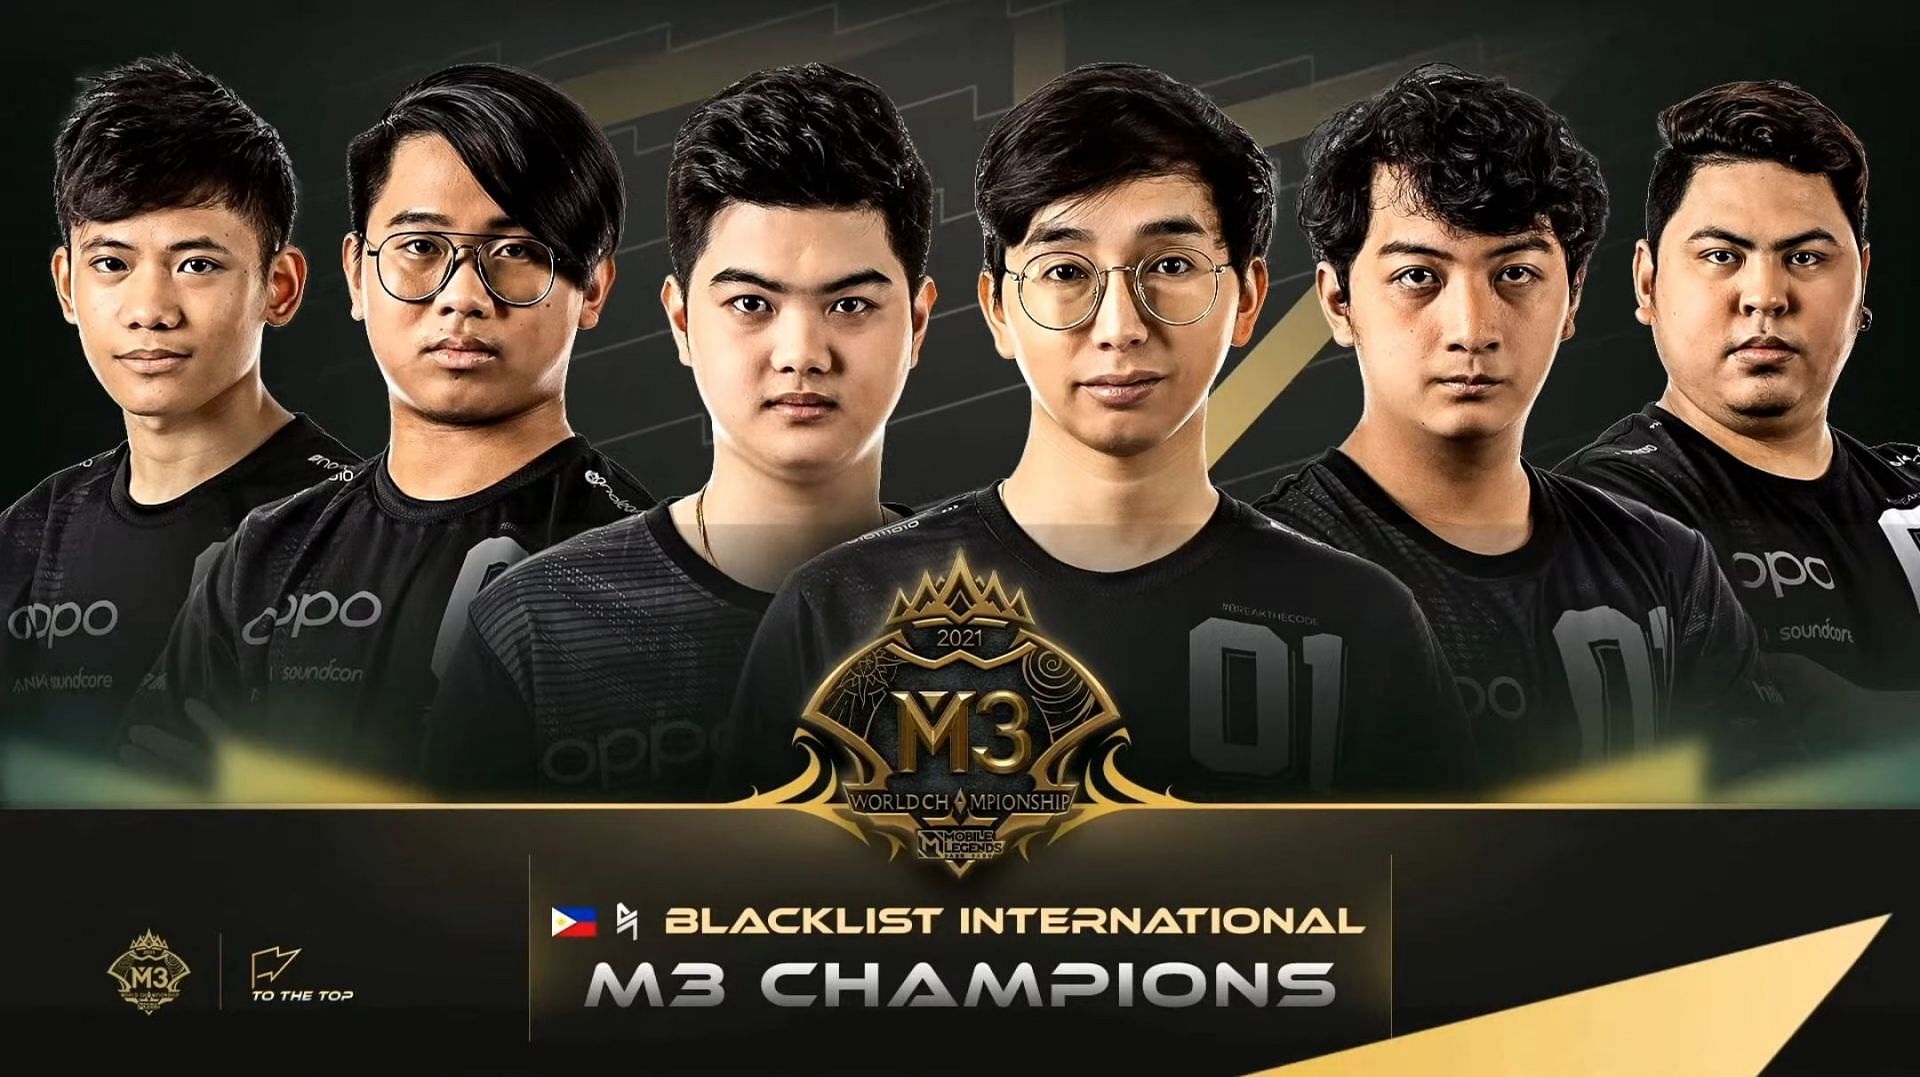 Blacklist International crowned champions of Mobile Legends: Bang Bang World Championship 2021 (M3)